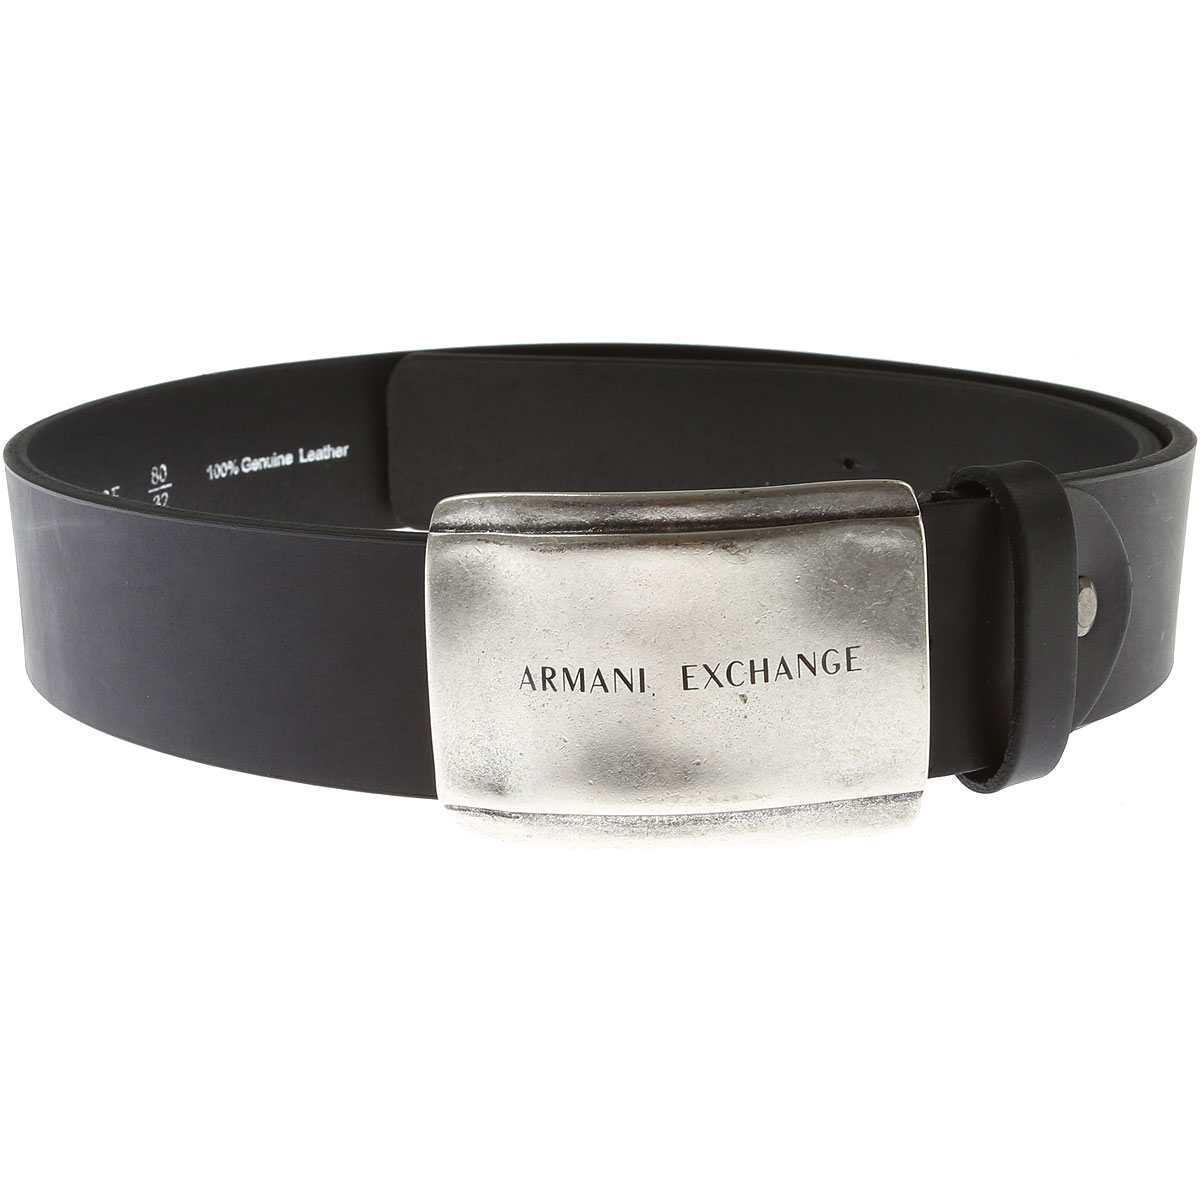 Mens Belts Armani Exchange, Style code: 951248-0a802-00020